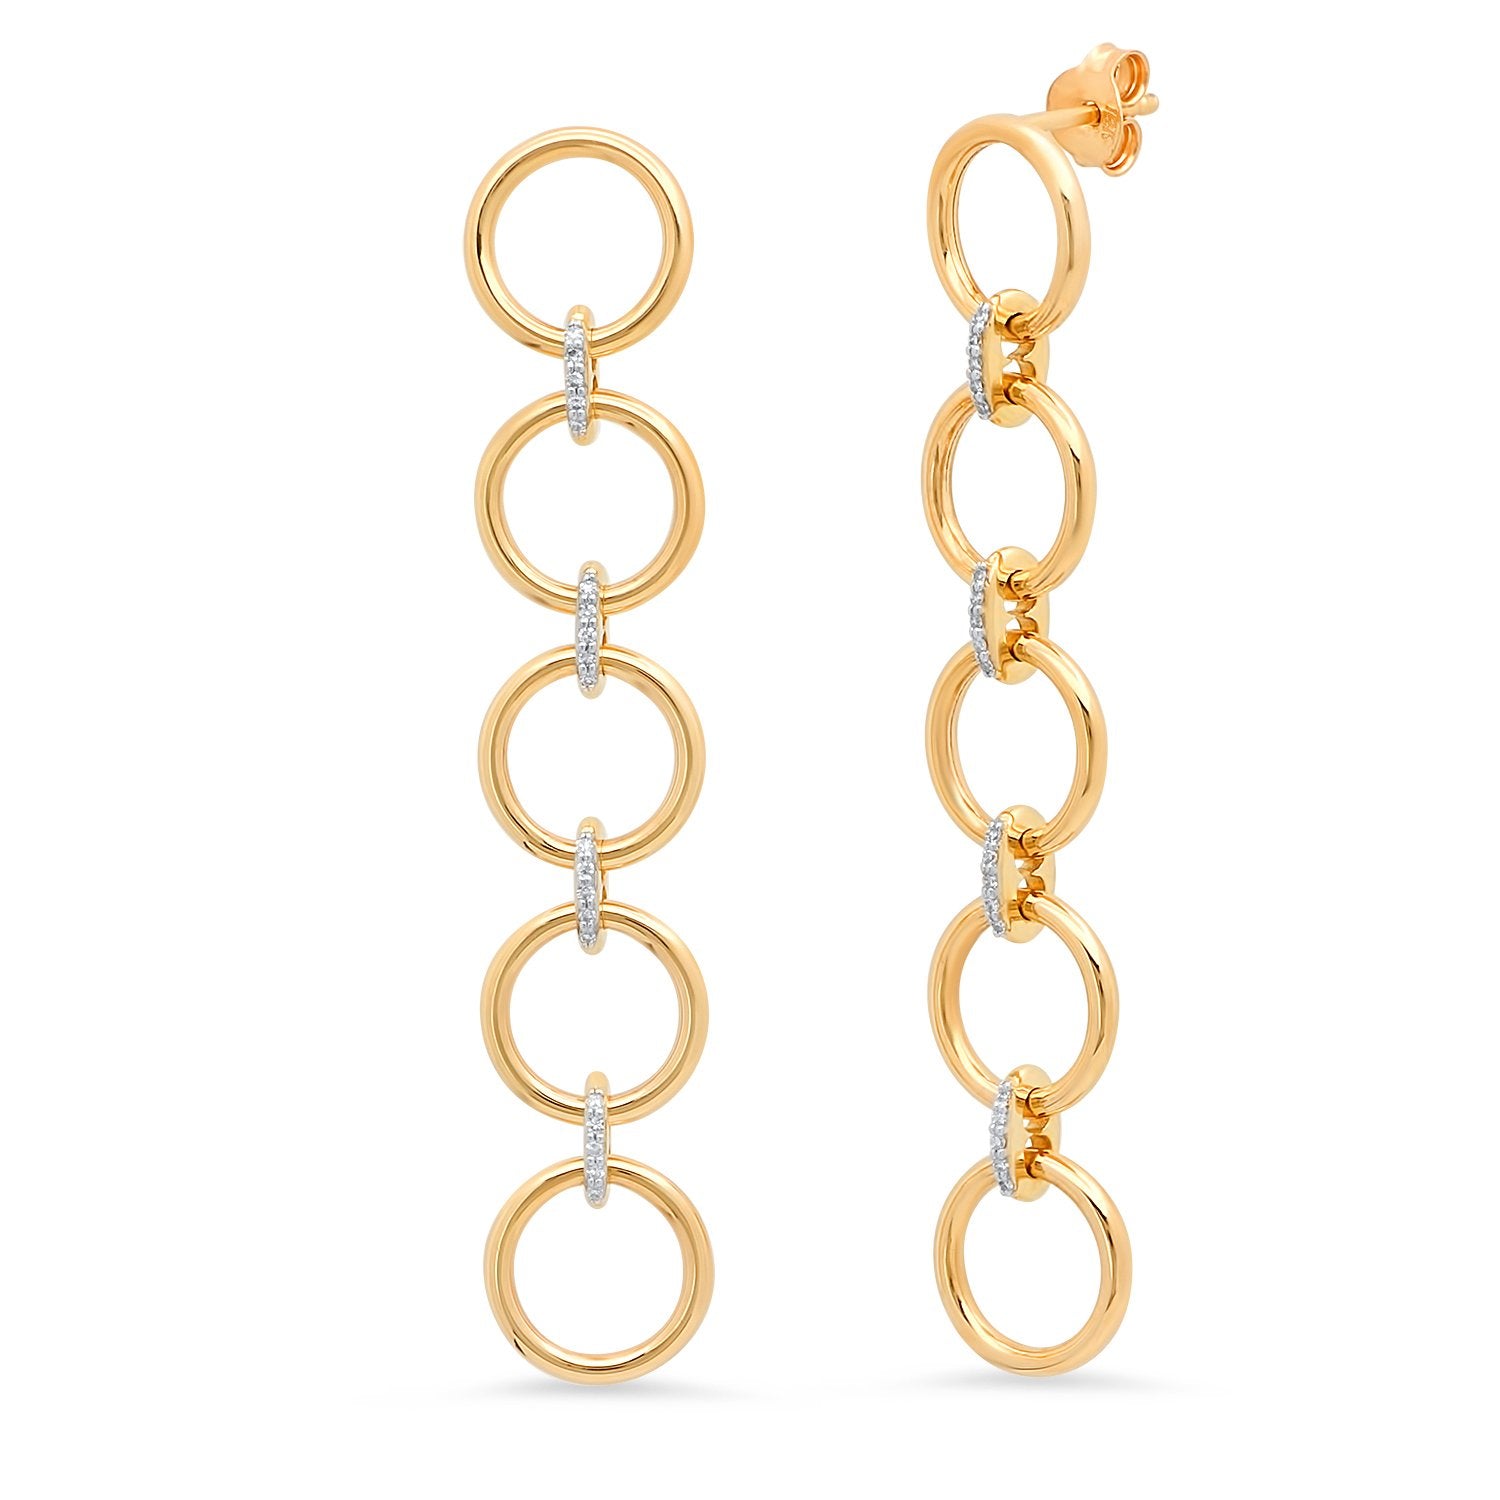 14K Yellow Gold Five Loop Earrings with Diamond Links